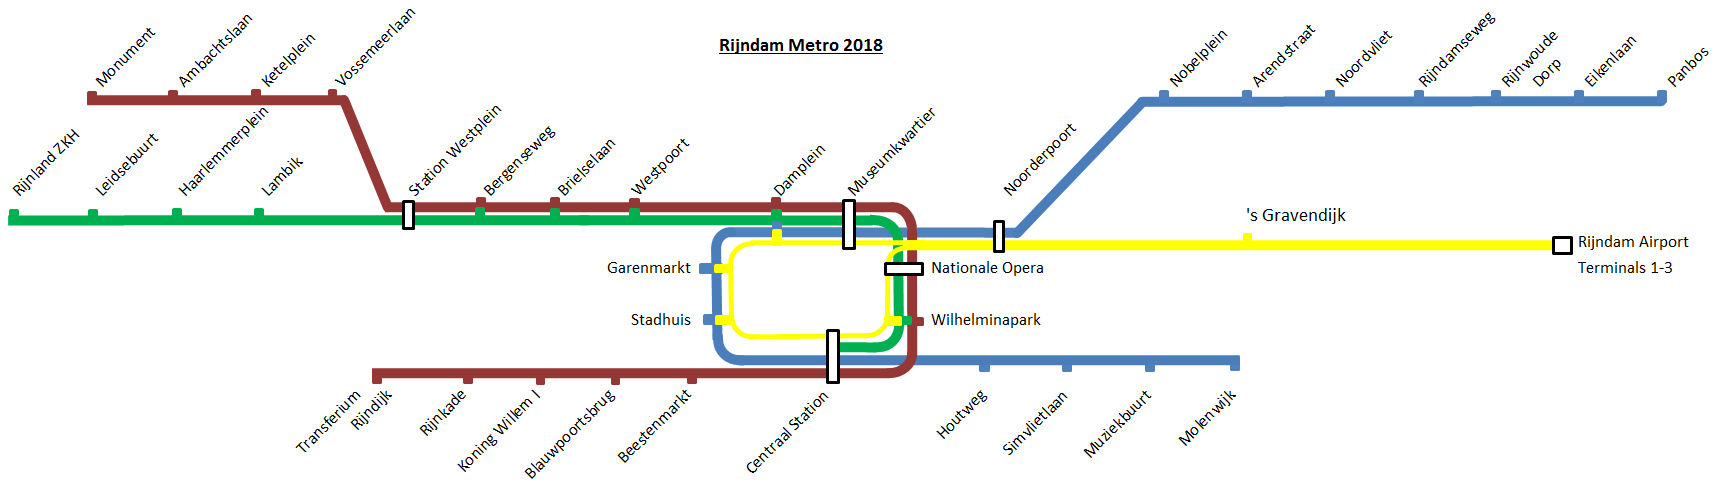 Rijndam_Metro wandkaart 2018.png